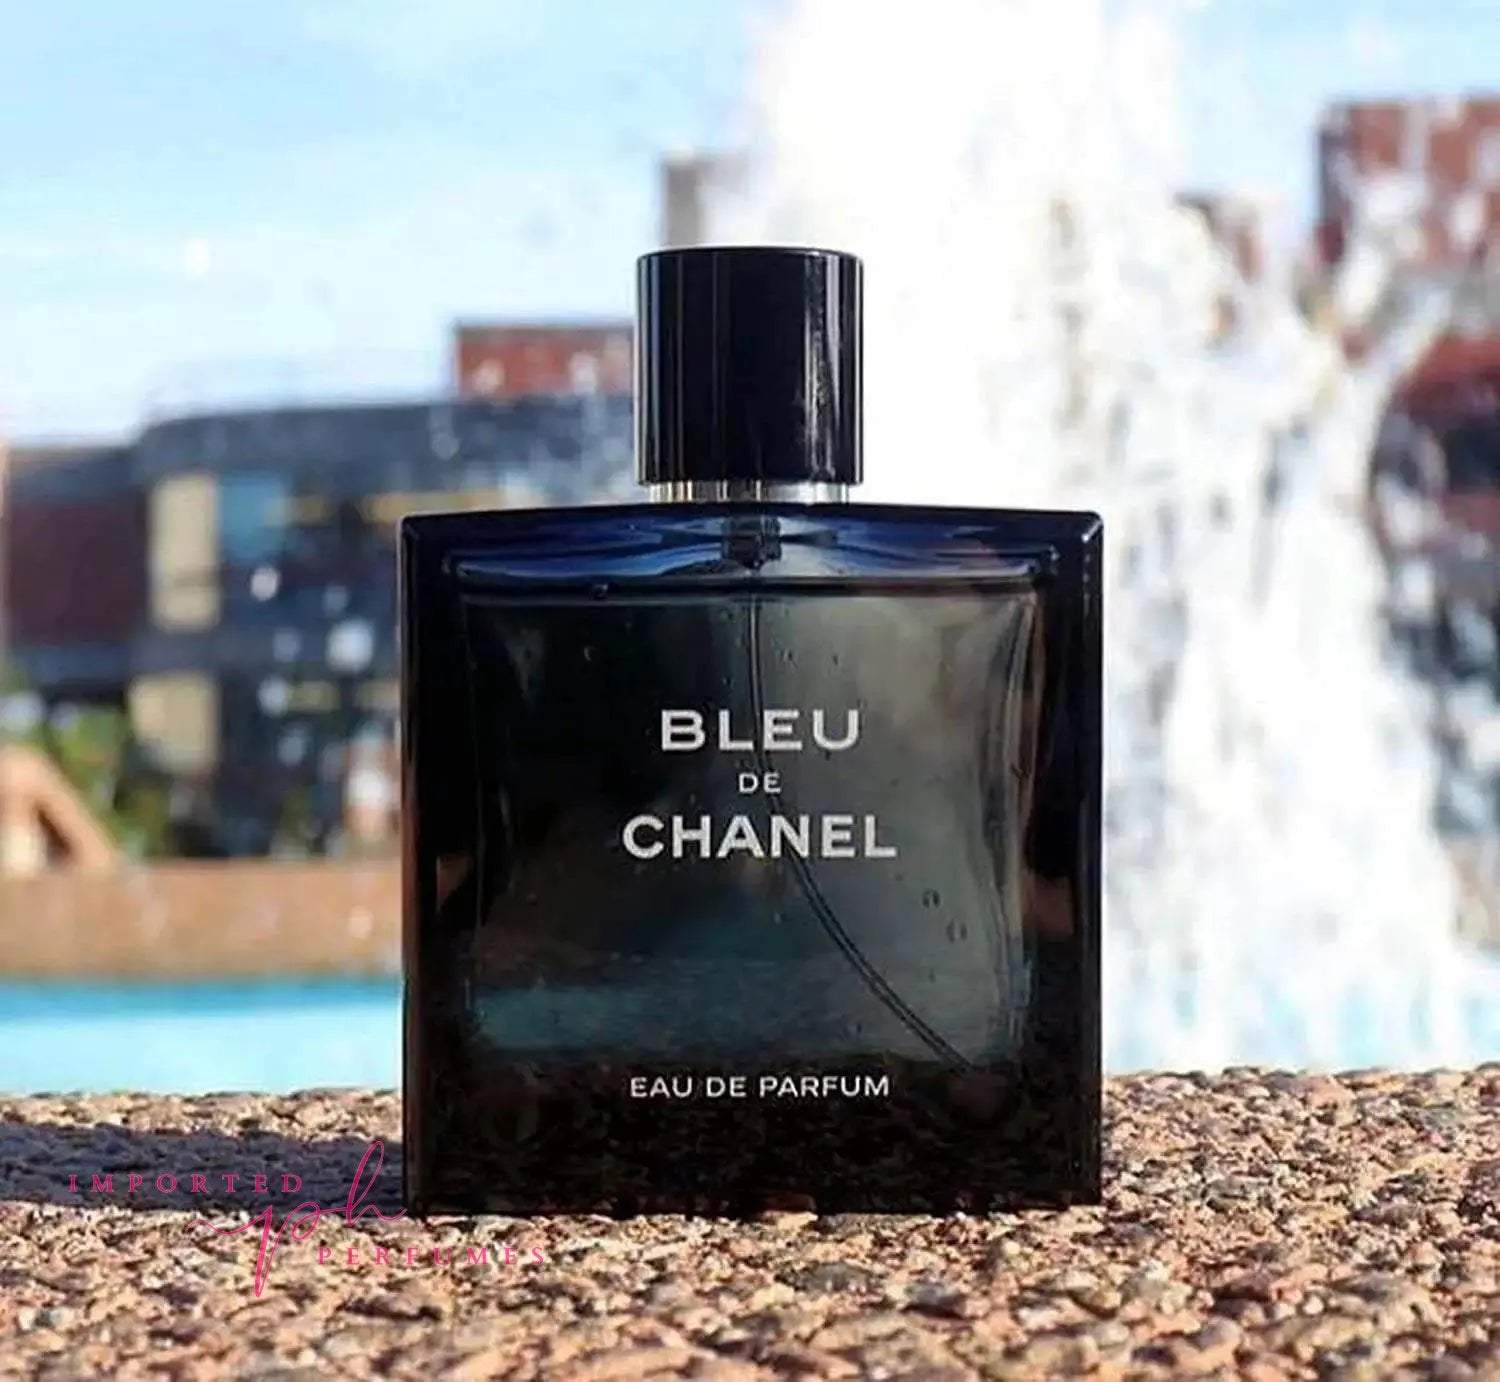 CHANEL Bleu Perfume Fragrances for Men for sale